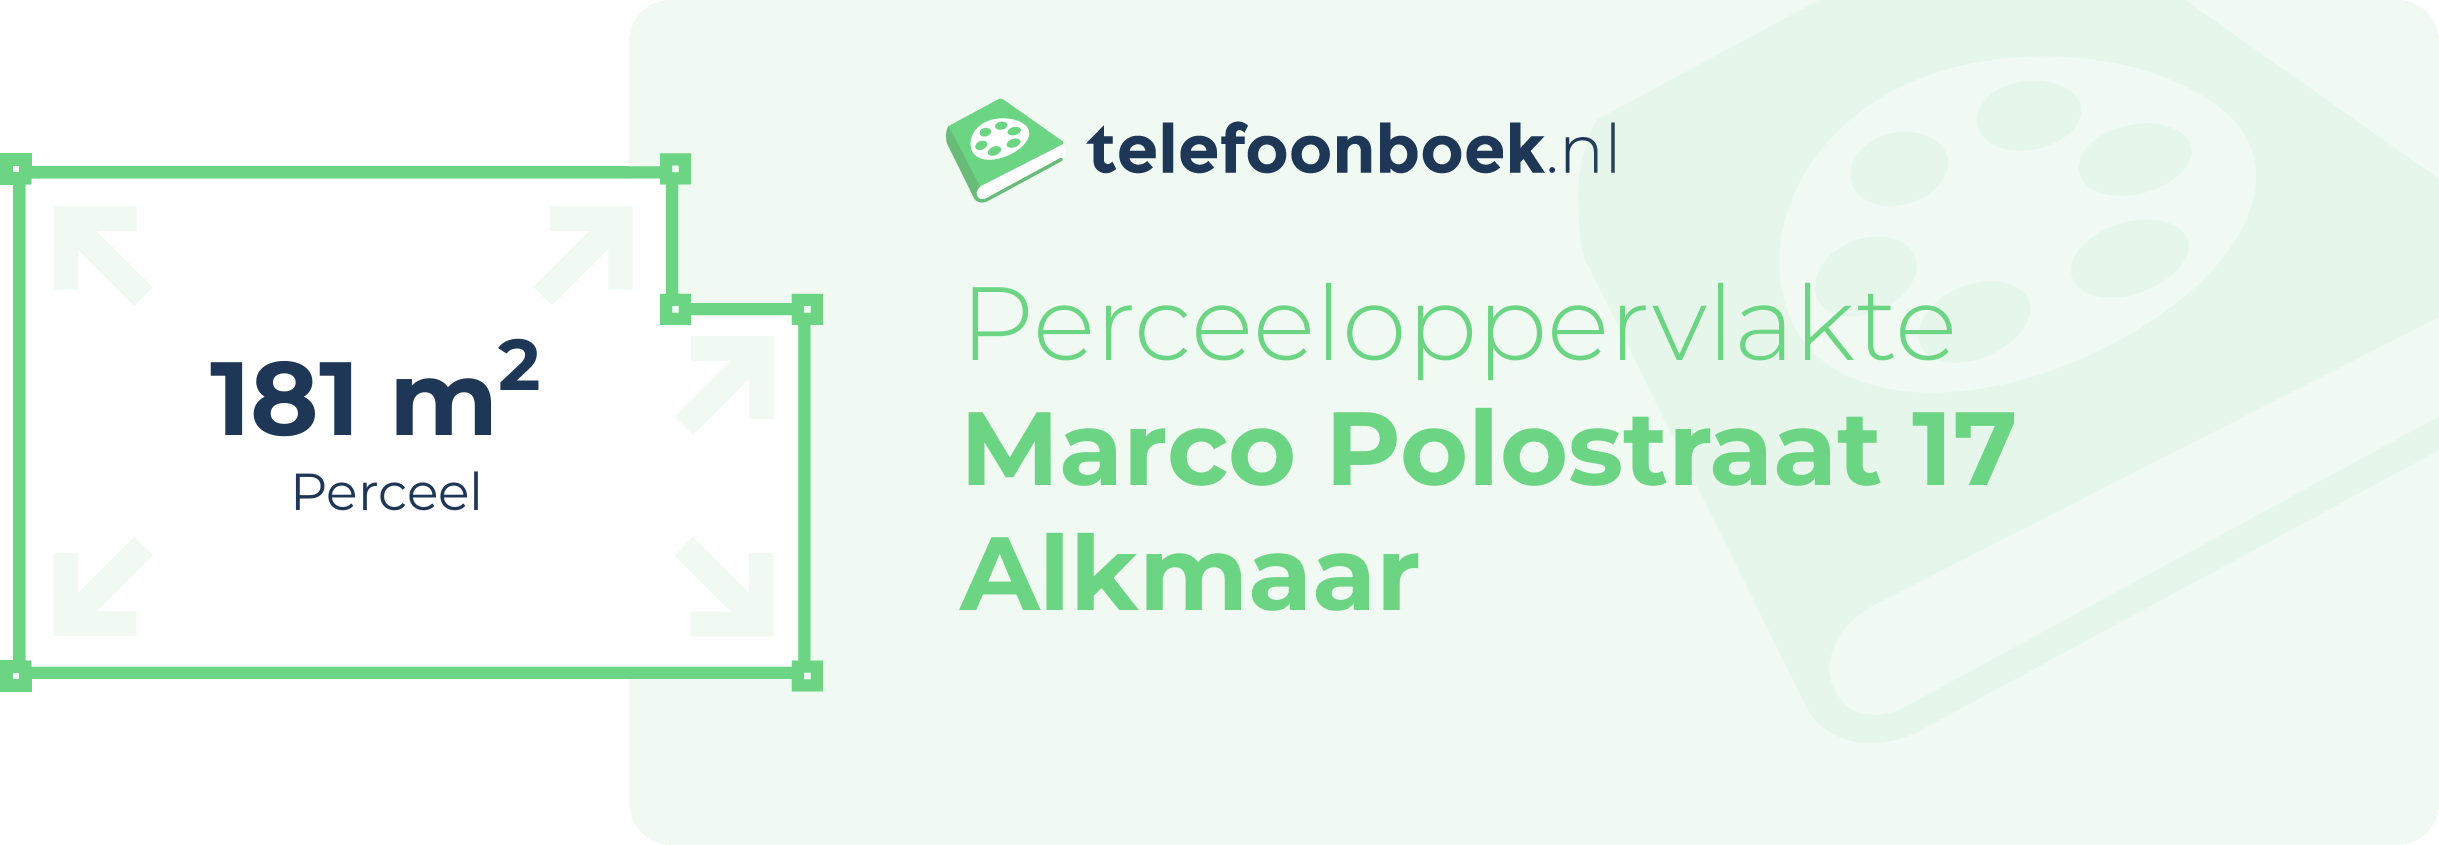 Perceeloppervlakte Marco Polostraat 17 Alkmaar